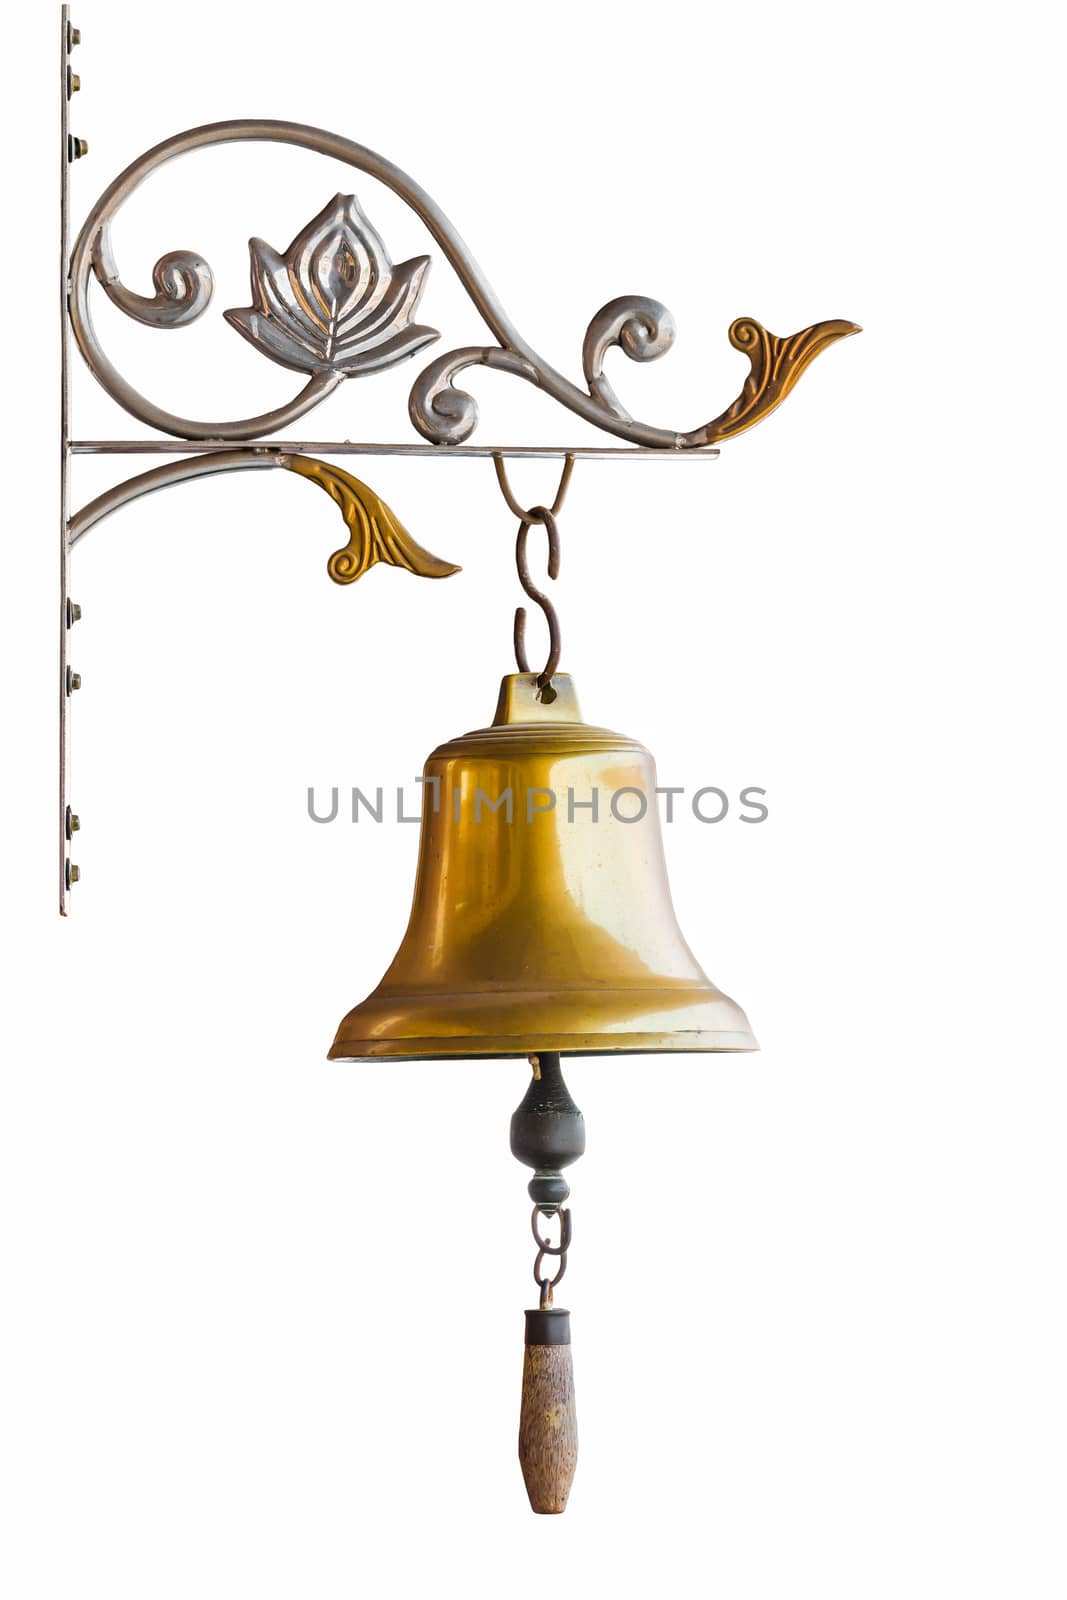 Brass bell by AEyZRiO